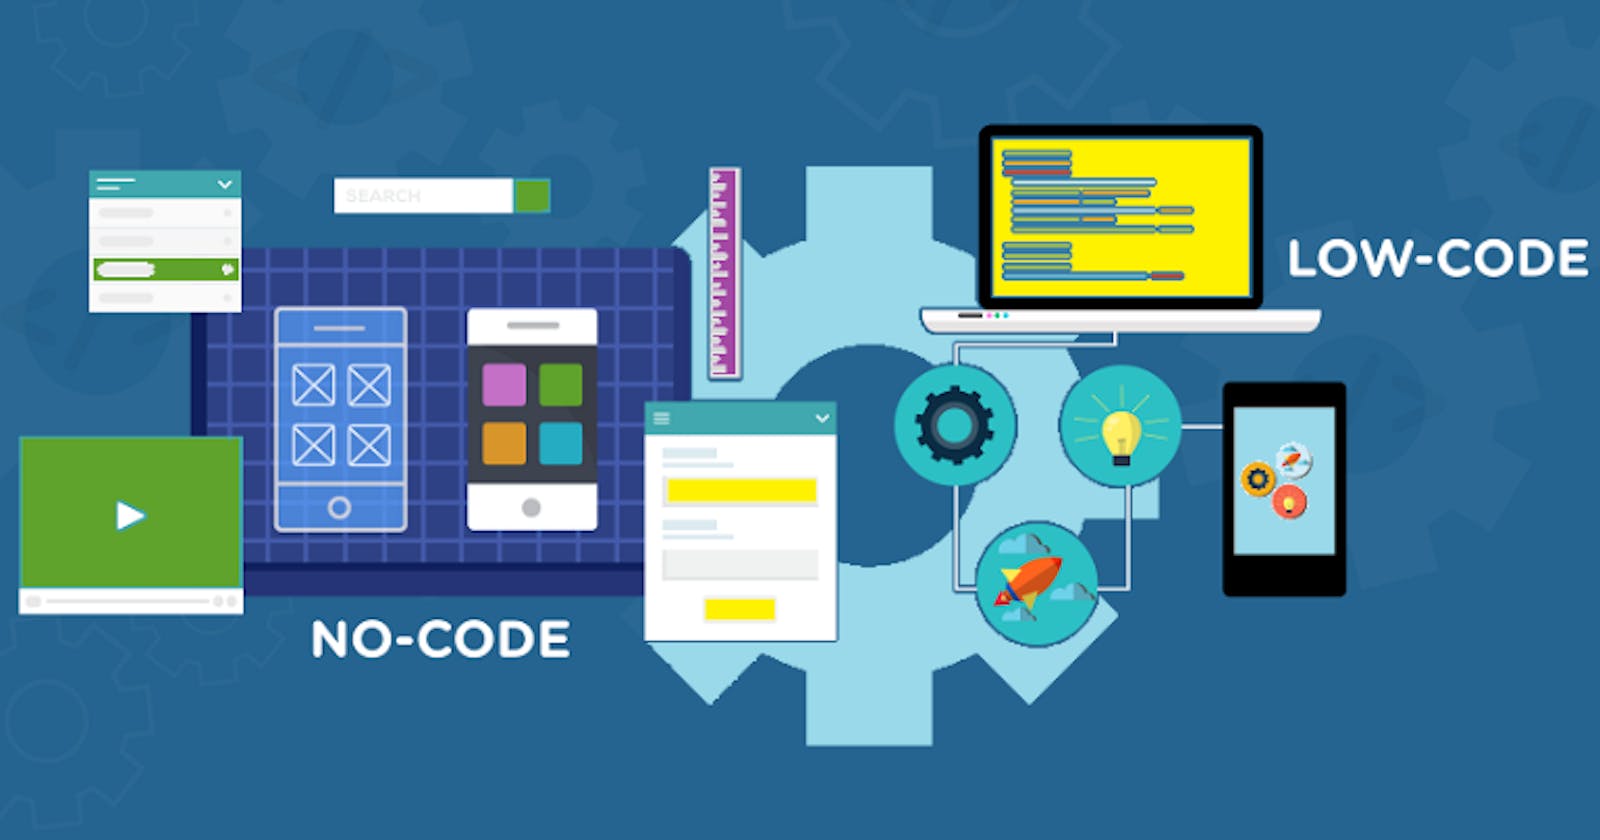 Low Code and No-Code Tools / Platforms